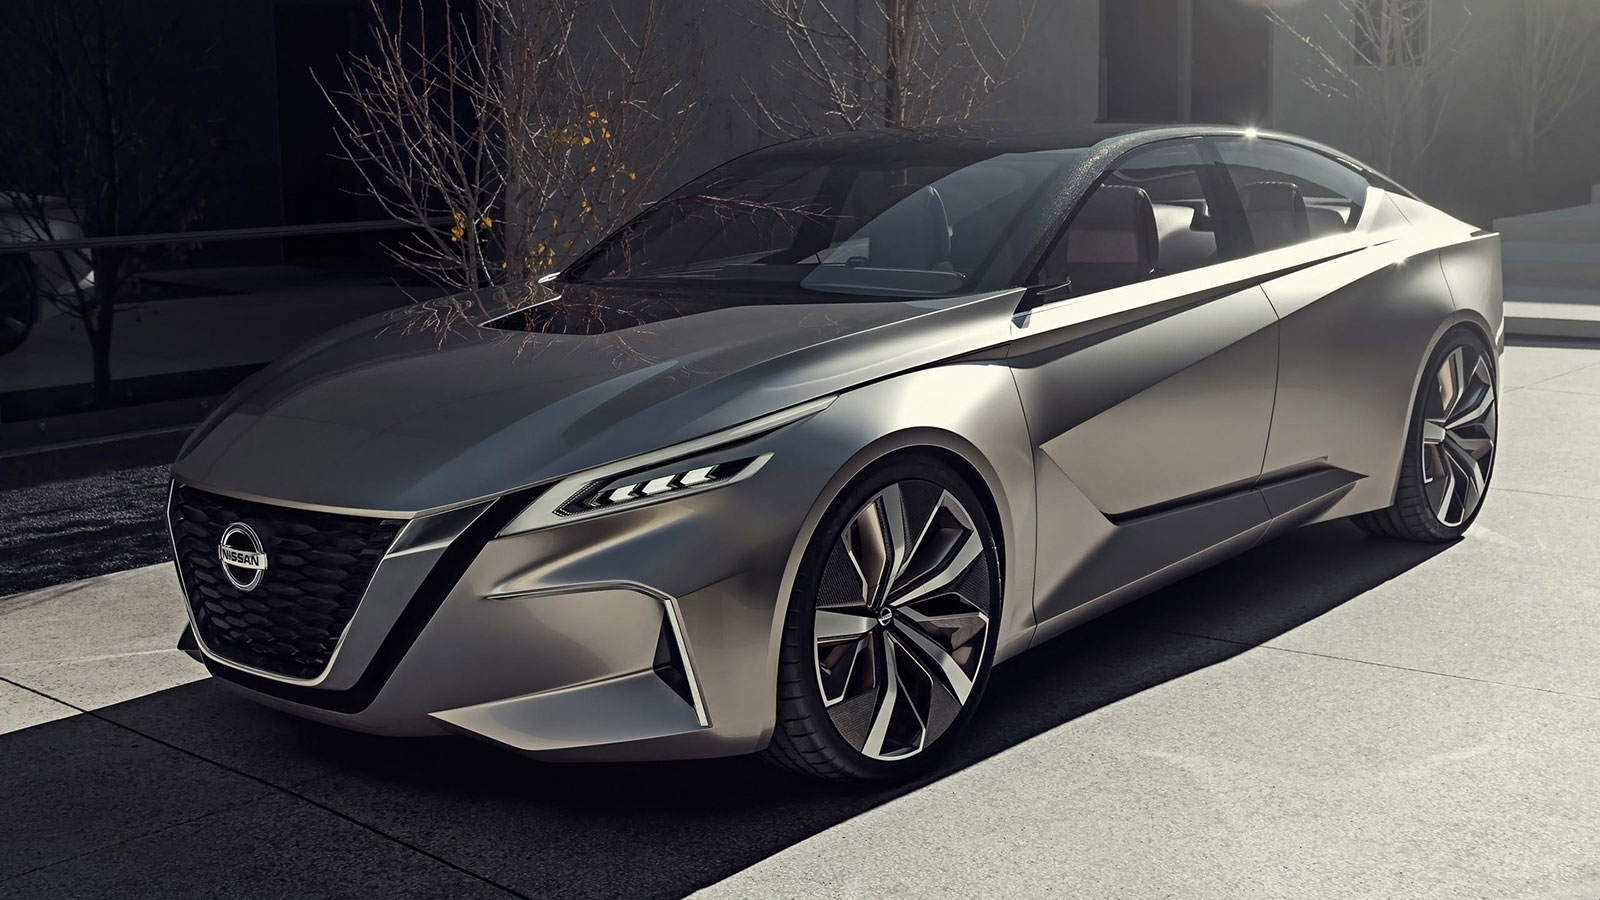 Nissan: Τα μελλοντικά μοντέλα θα έχουν διαφορετικό πρόσωπο